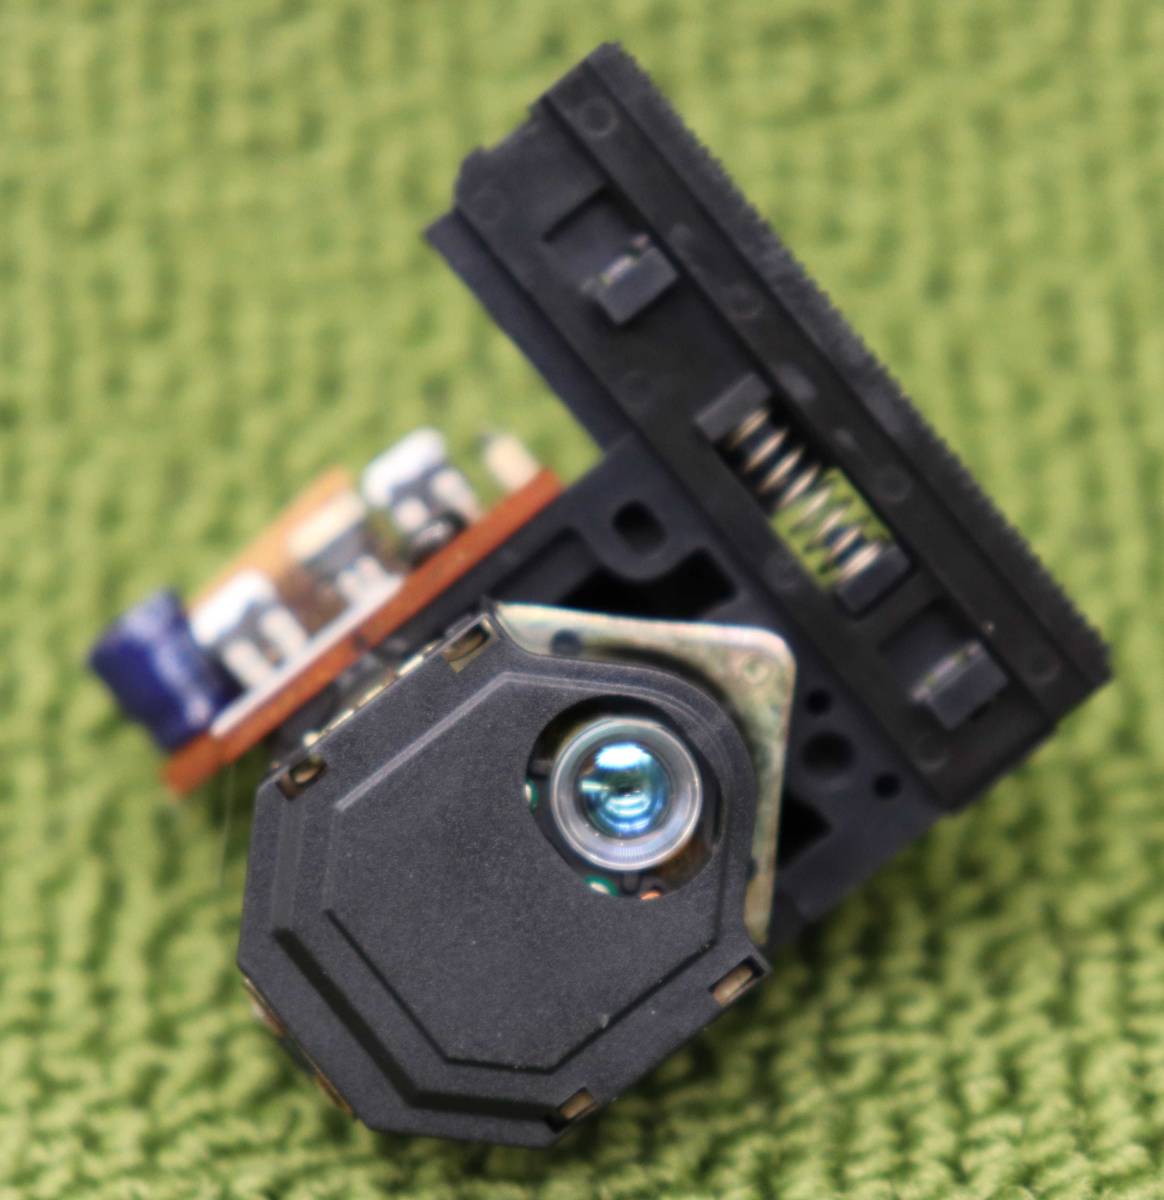 PU5送料無料 未使用 新品 日本製 KSS-240A CDピックアップ 光ピックアップ 光学レンズ MADE IN JAPAN 同梱可能 管理0425nmm_画像3